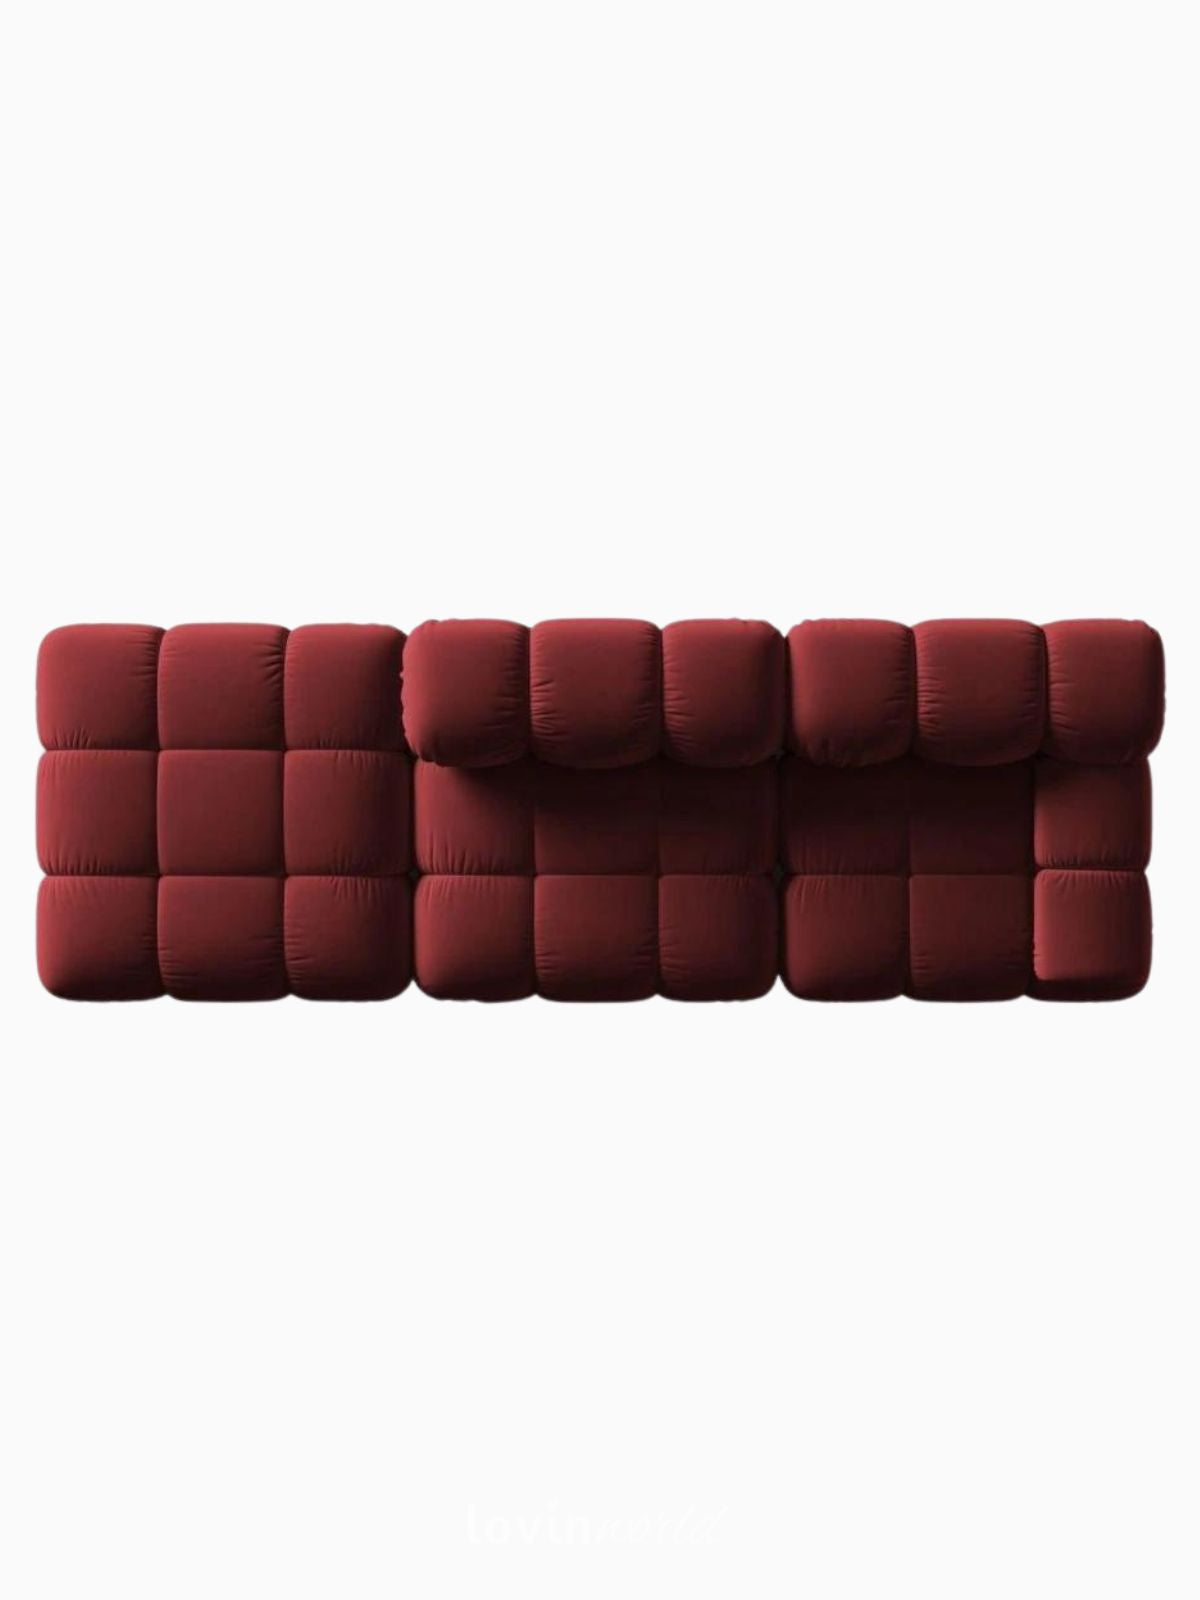 Divano modulare 4 sedute Bellis in velluto, colore rosso-4